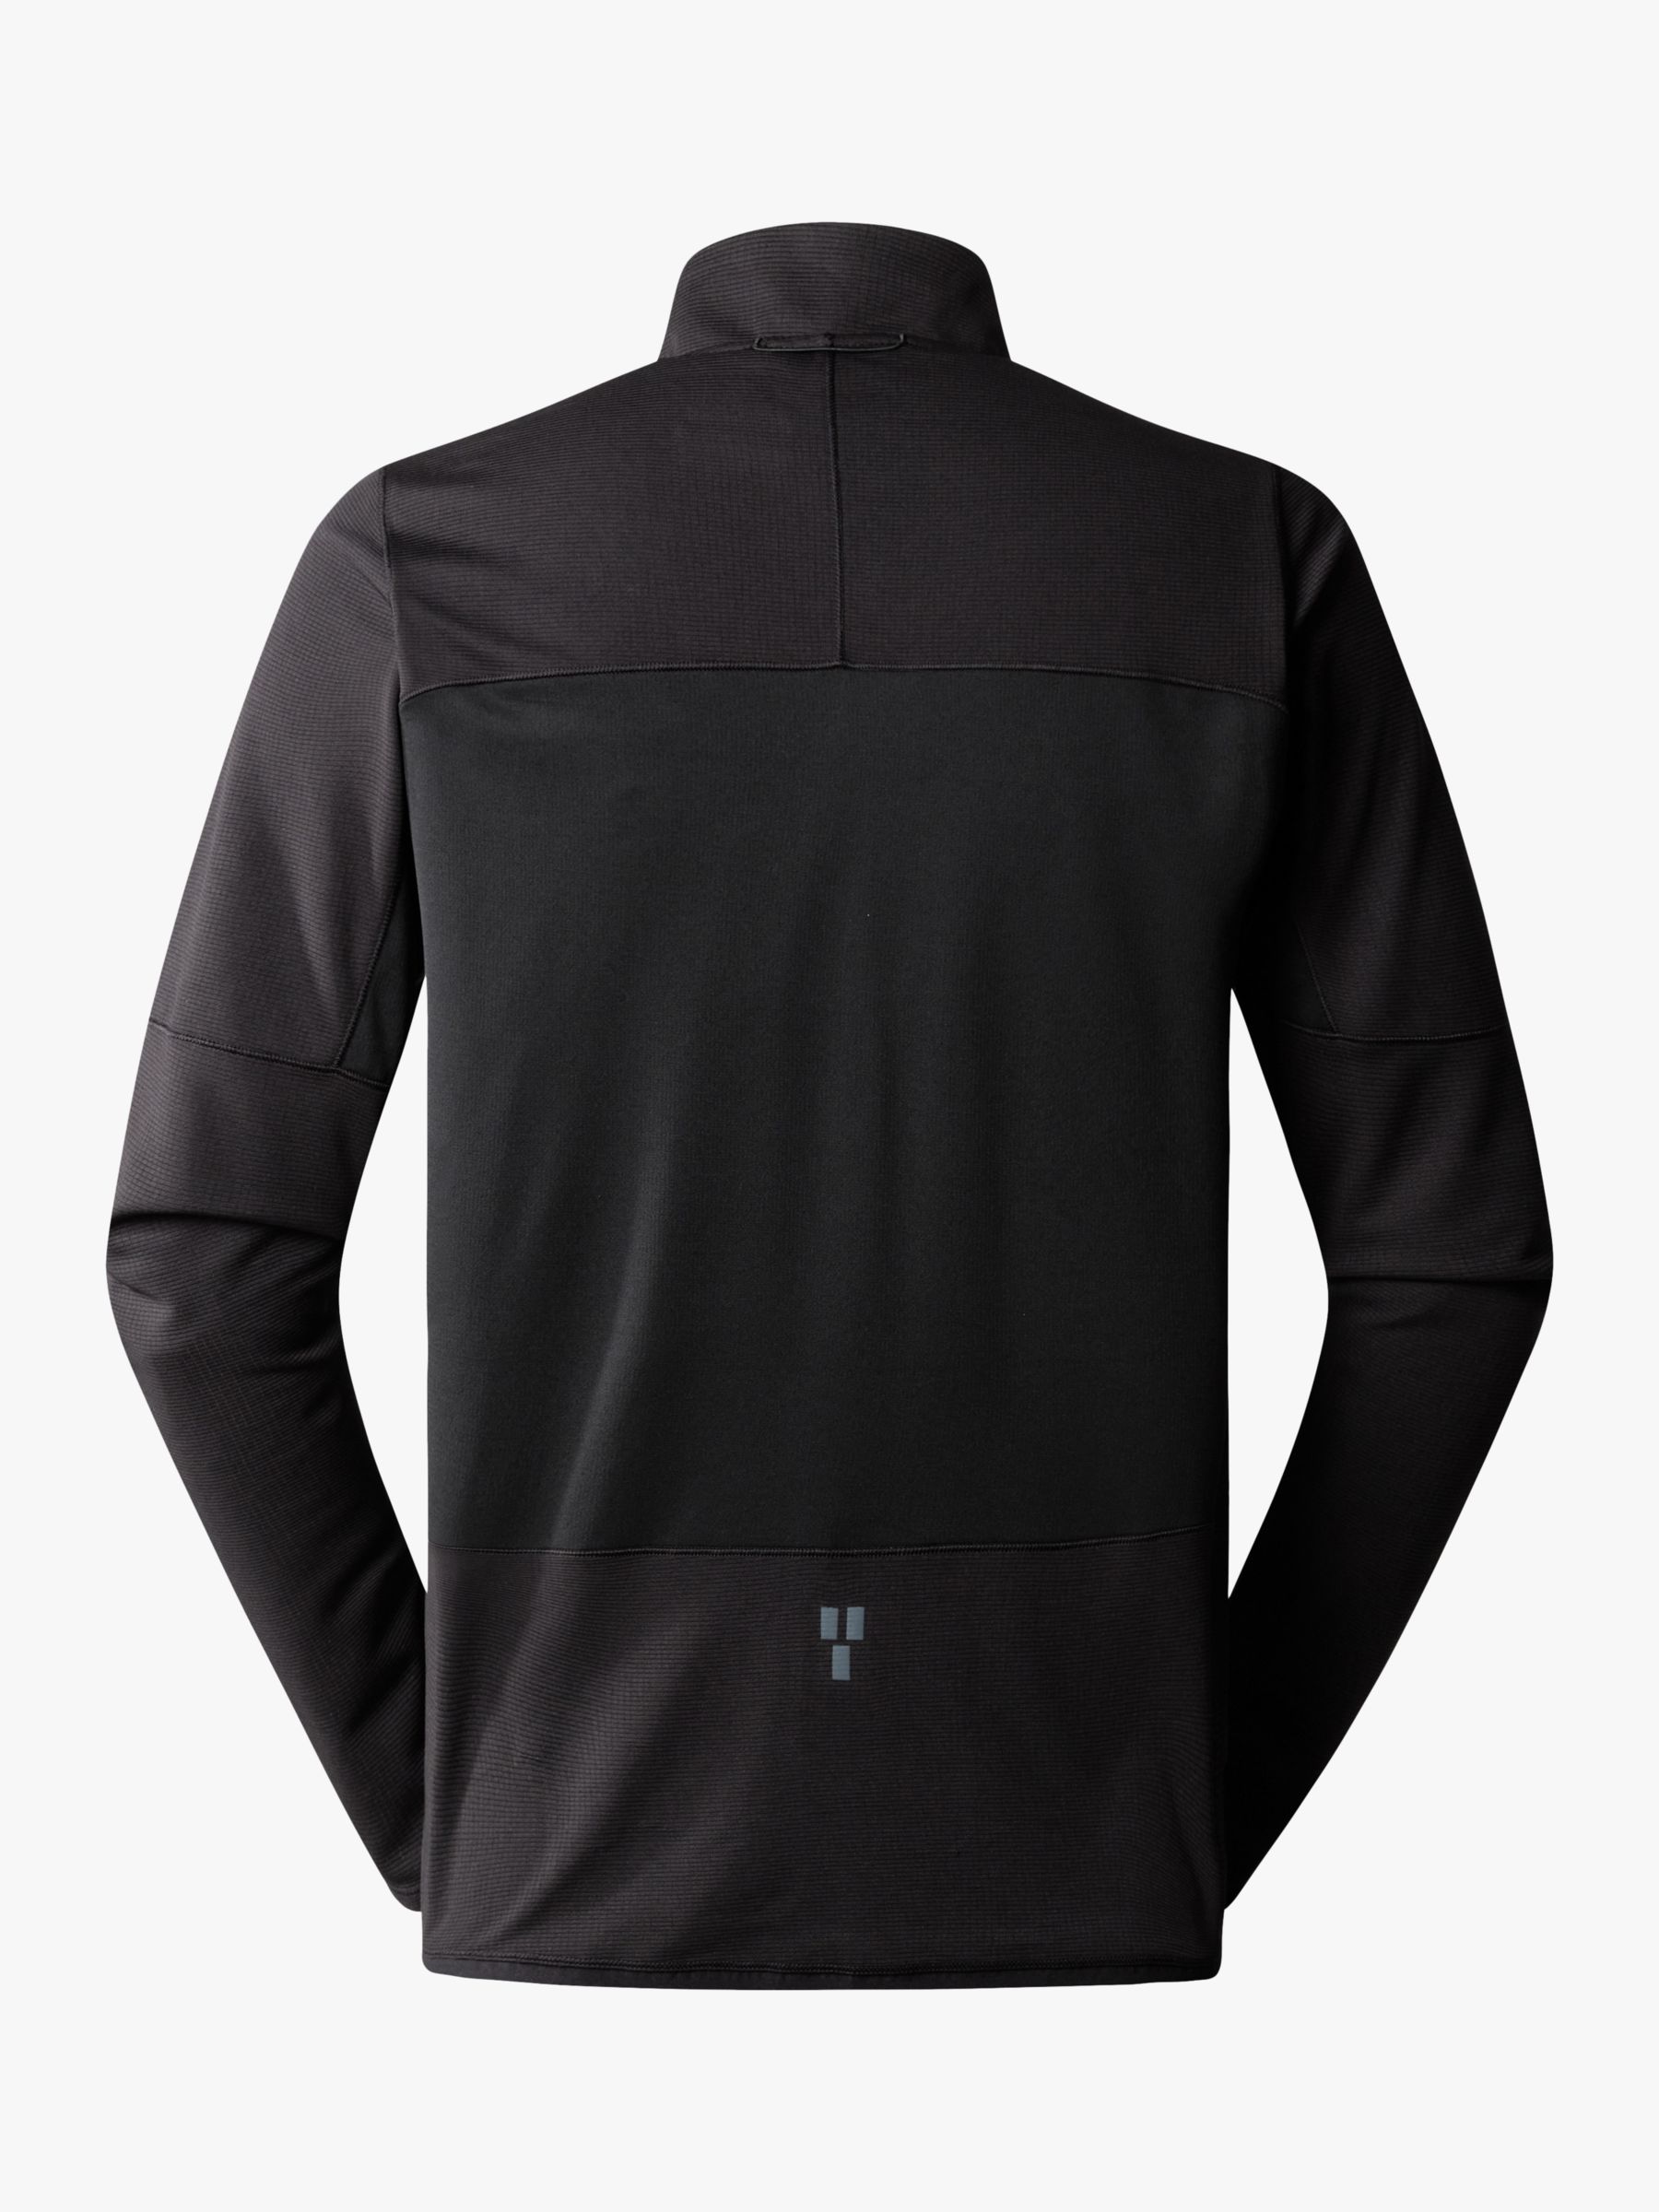 The North Face Sunriser 1/4 Zip Long Sleeve Top, Black, XL